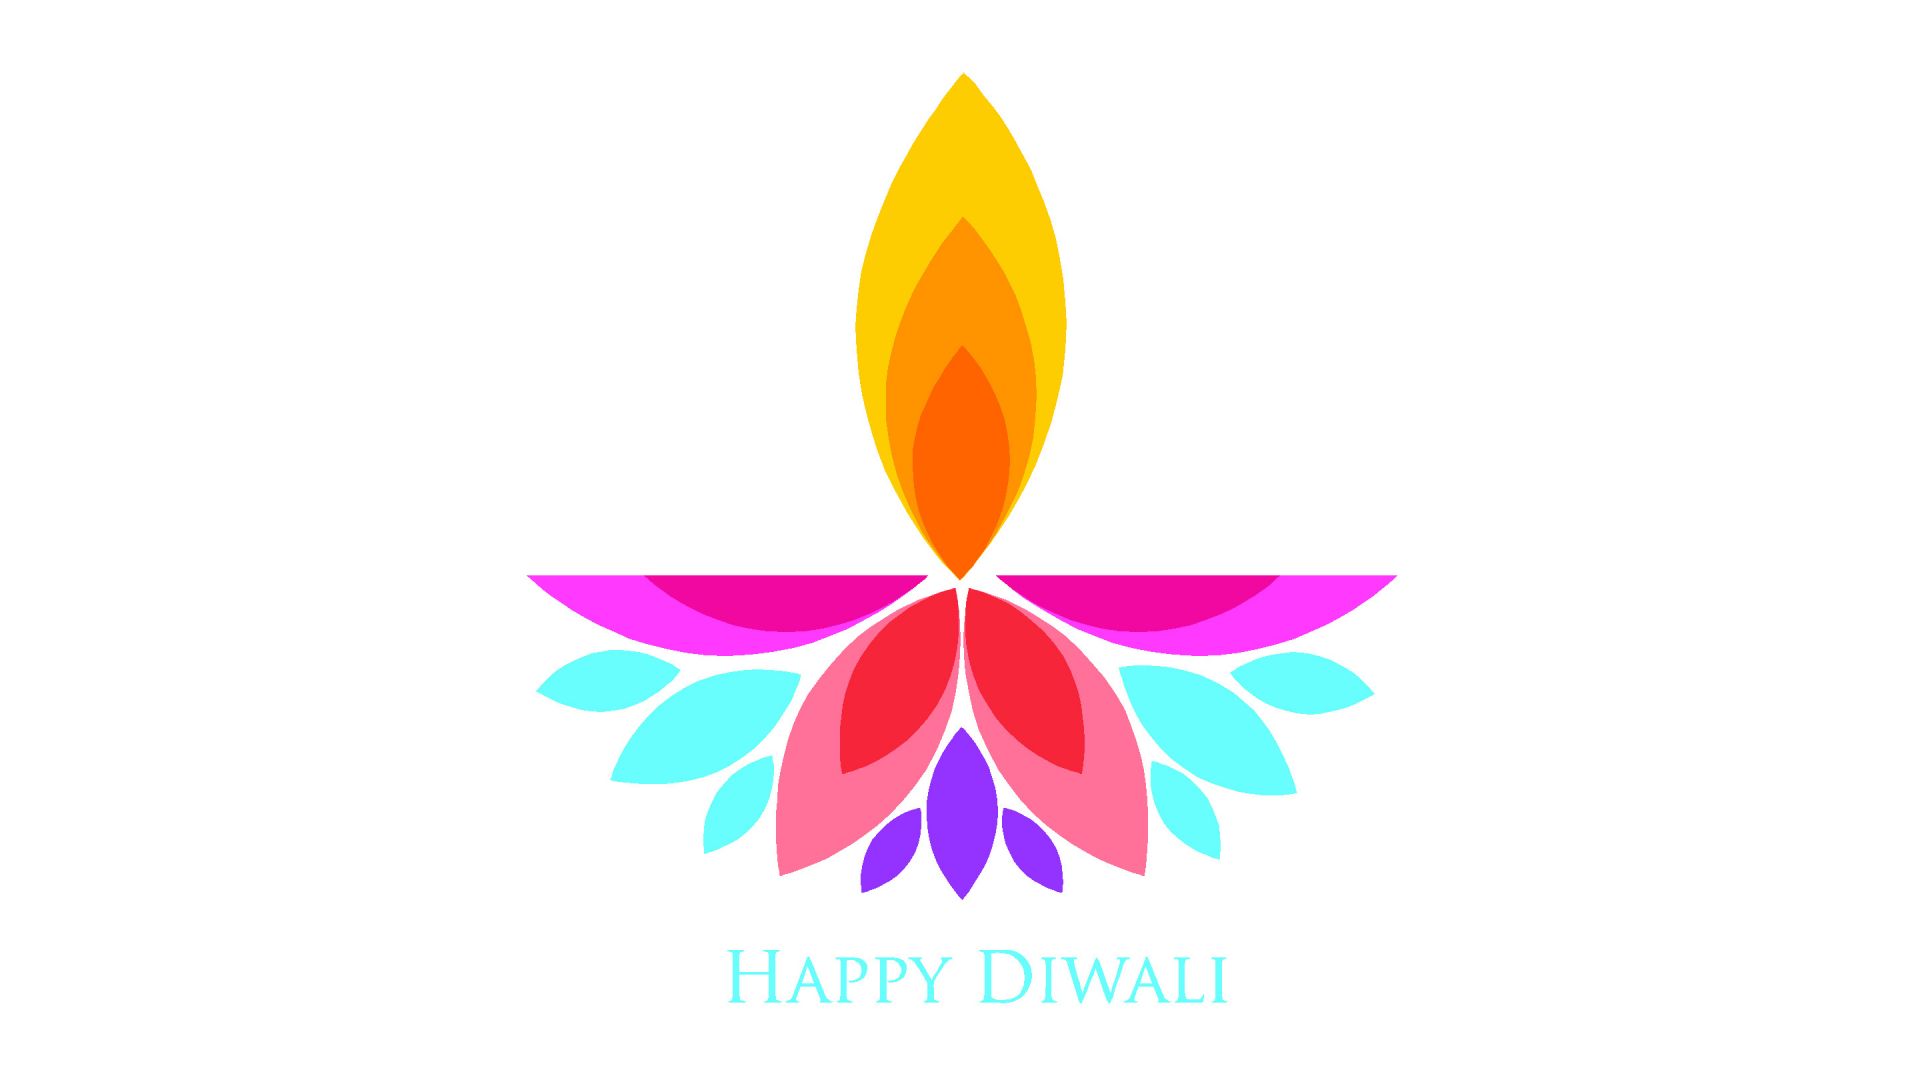 Desktop Wallpaper 2016 Happy Diwali, Hd Image, Picture, Background, C Prjs